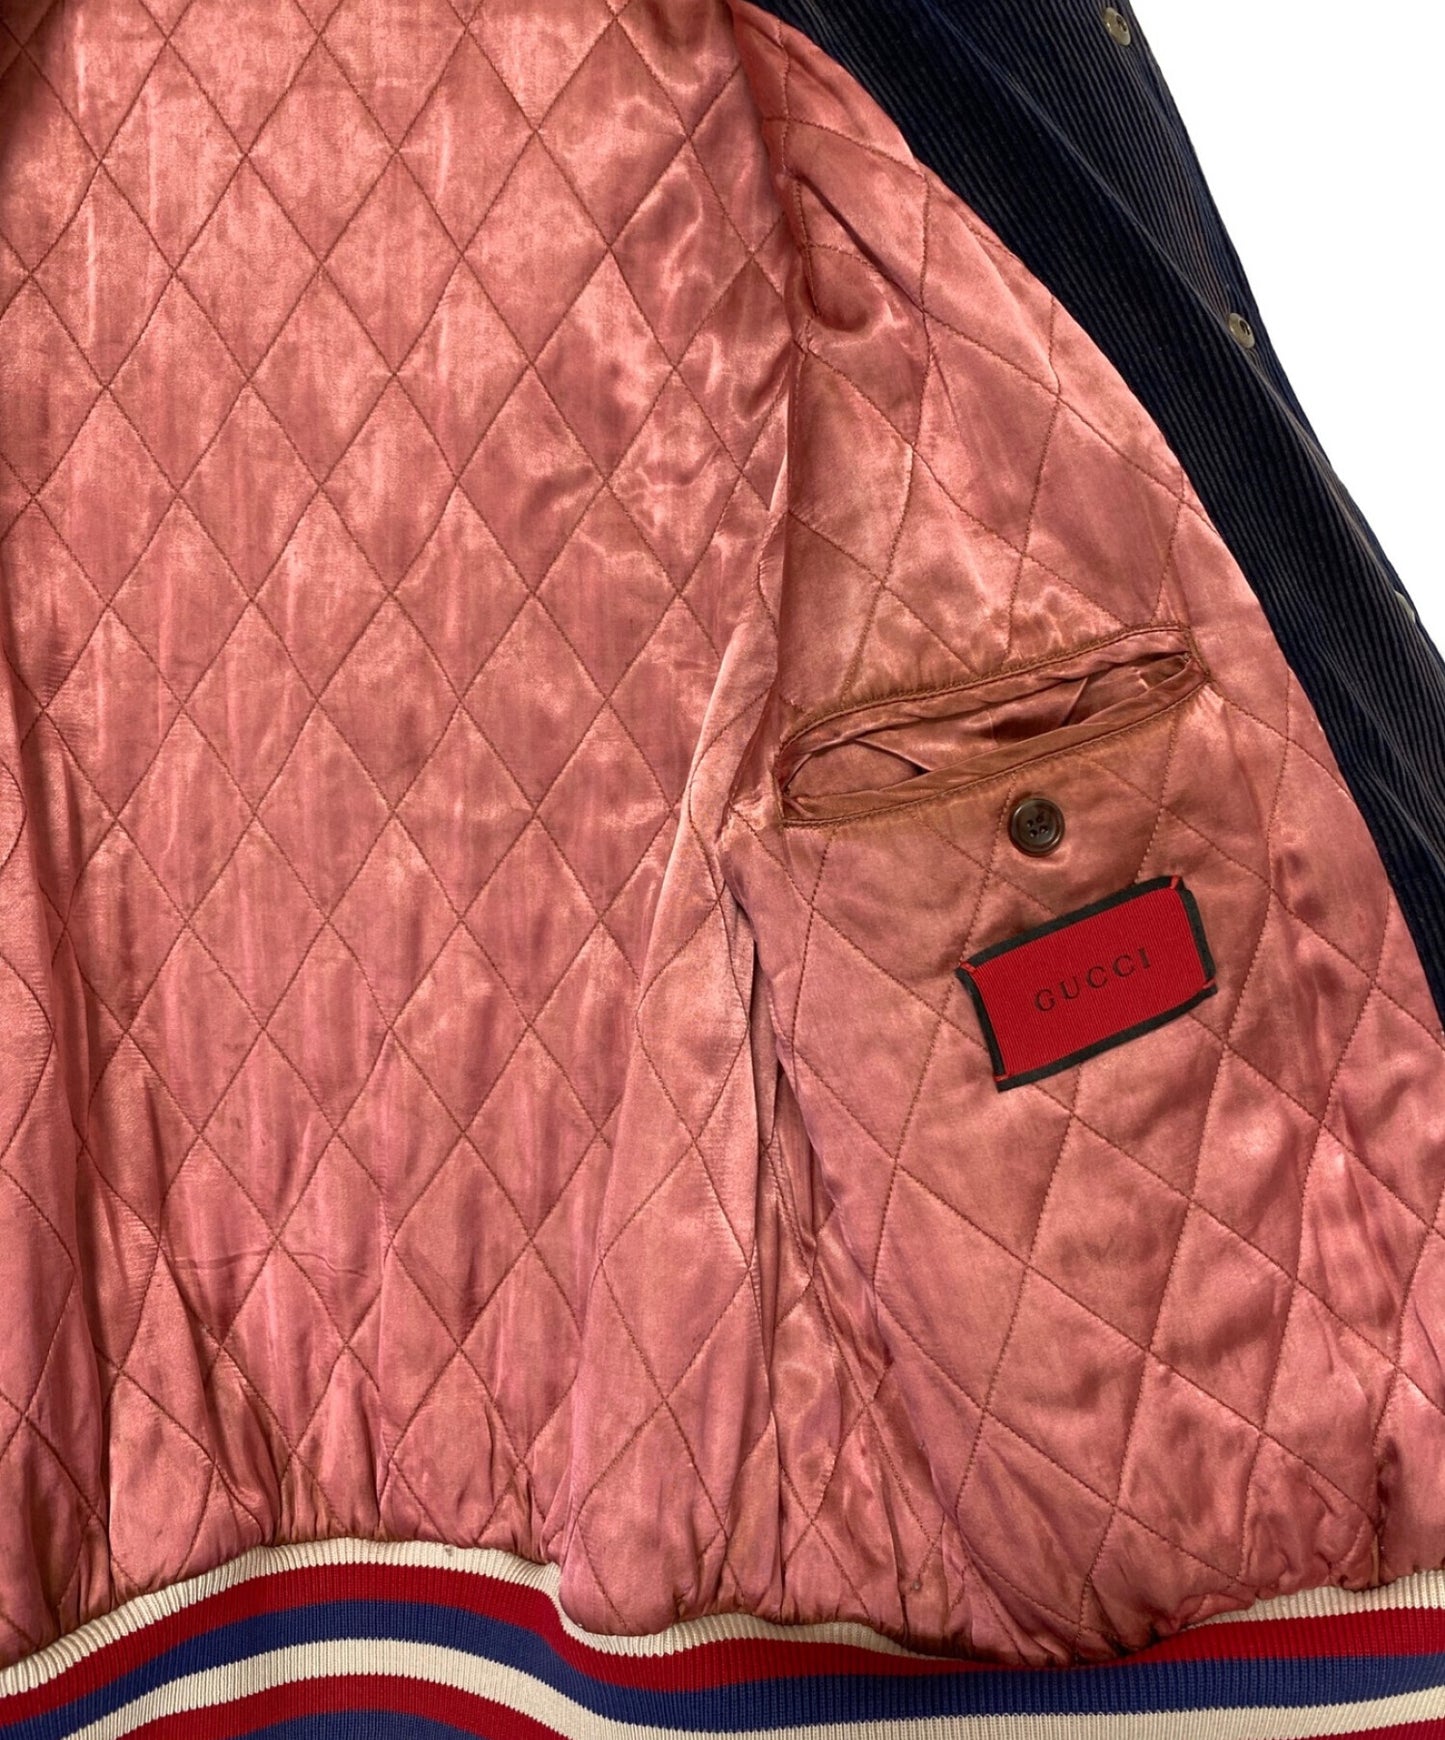 Gucci Gucci DSM特殊洗滌的天鵝絨鈕扣炸彈夾克（Gucci Dover Street市場特殊洗滌天鵝絨上的鈕扣炸彈夾克）475032-XR563